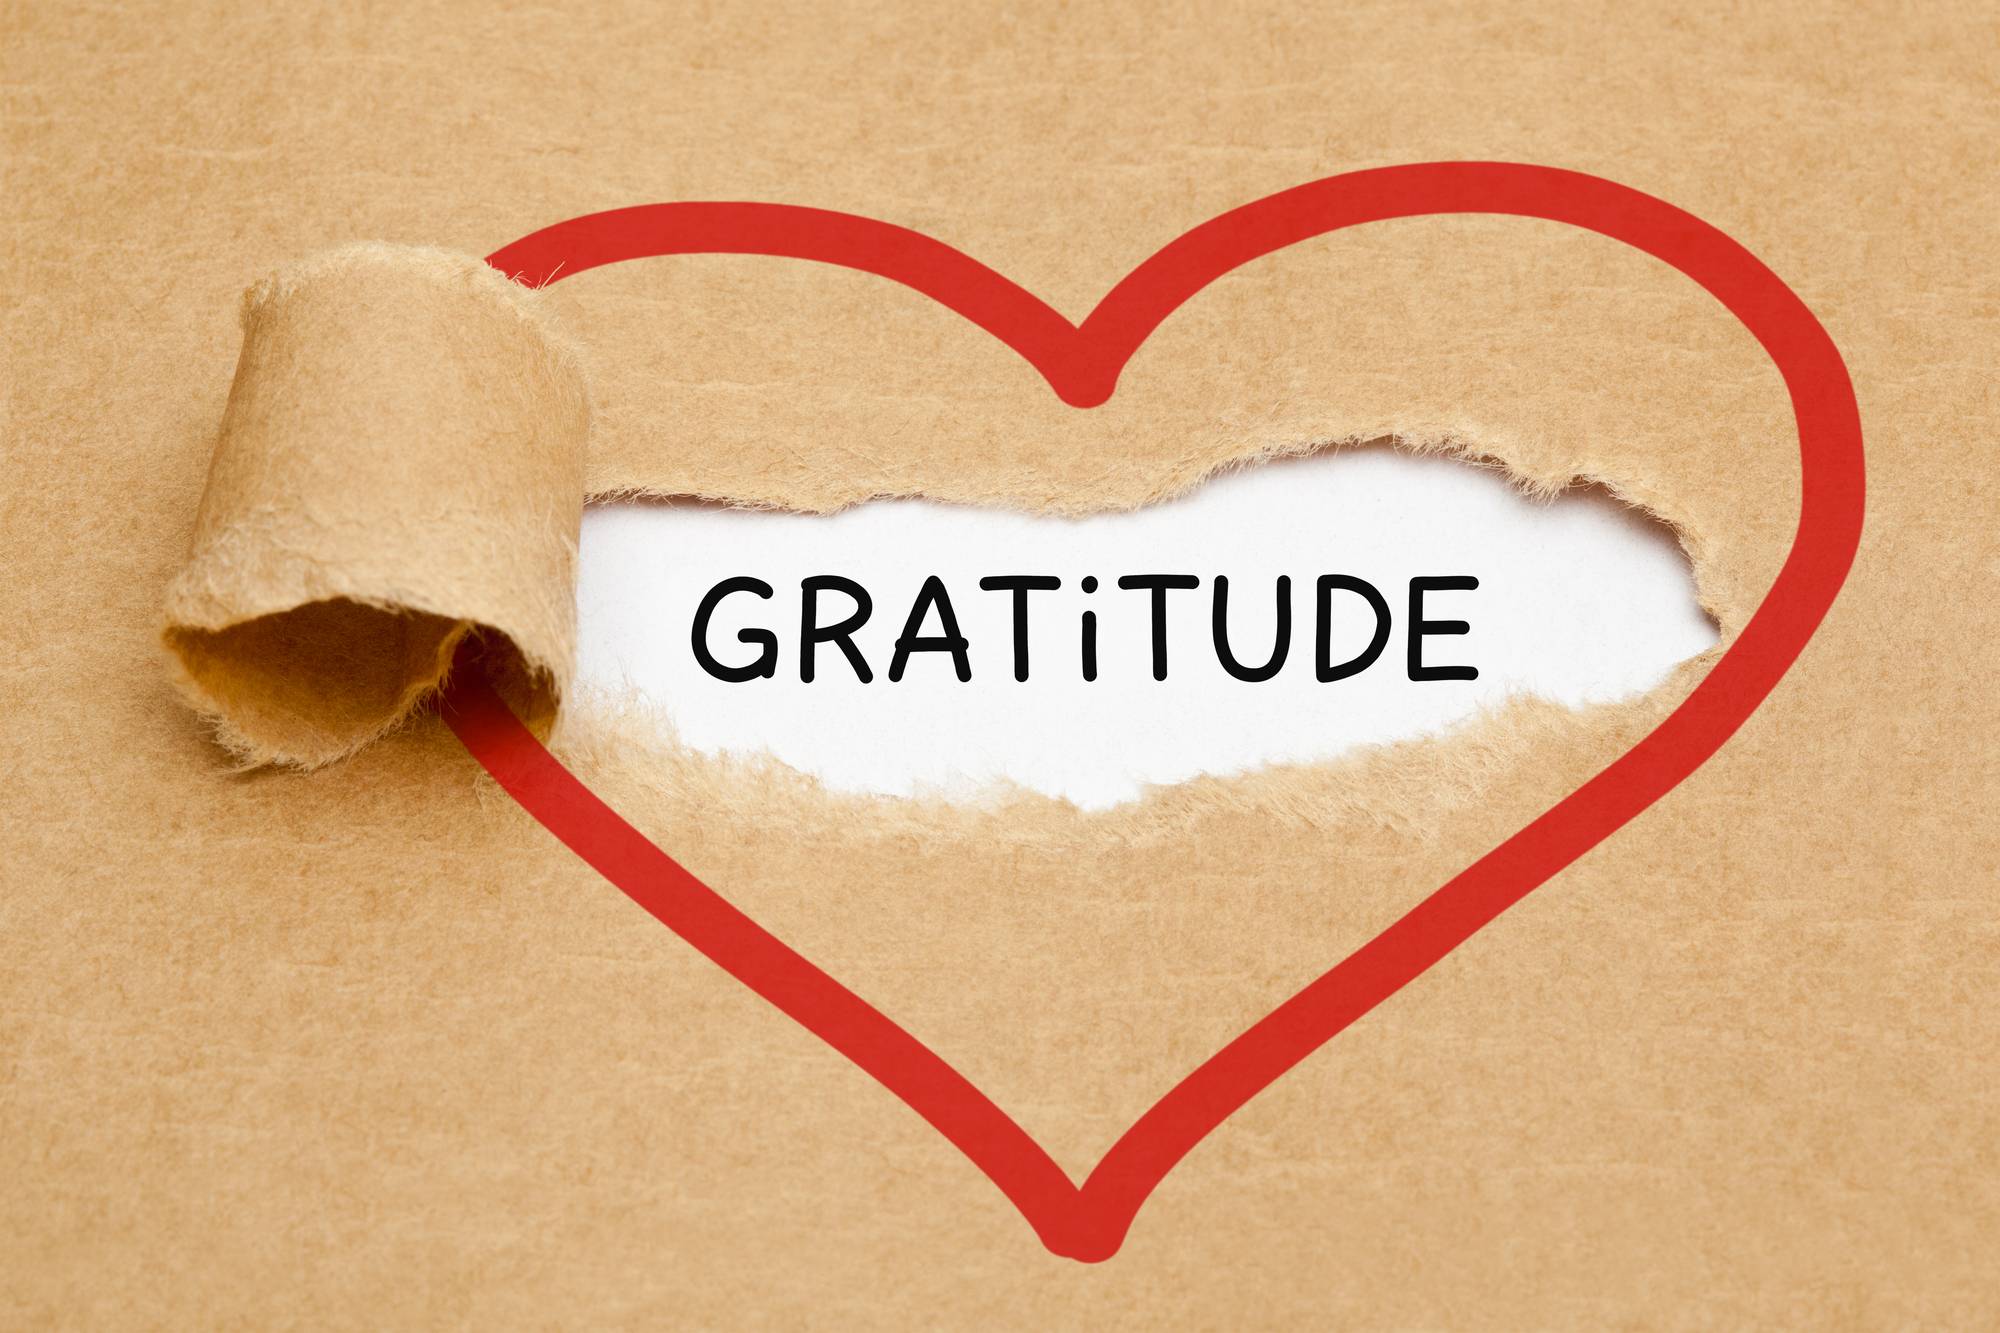 Gratitude always!